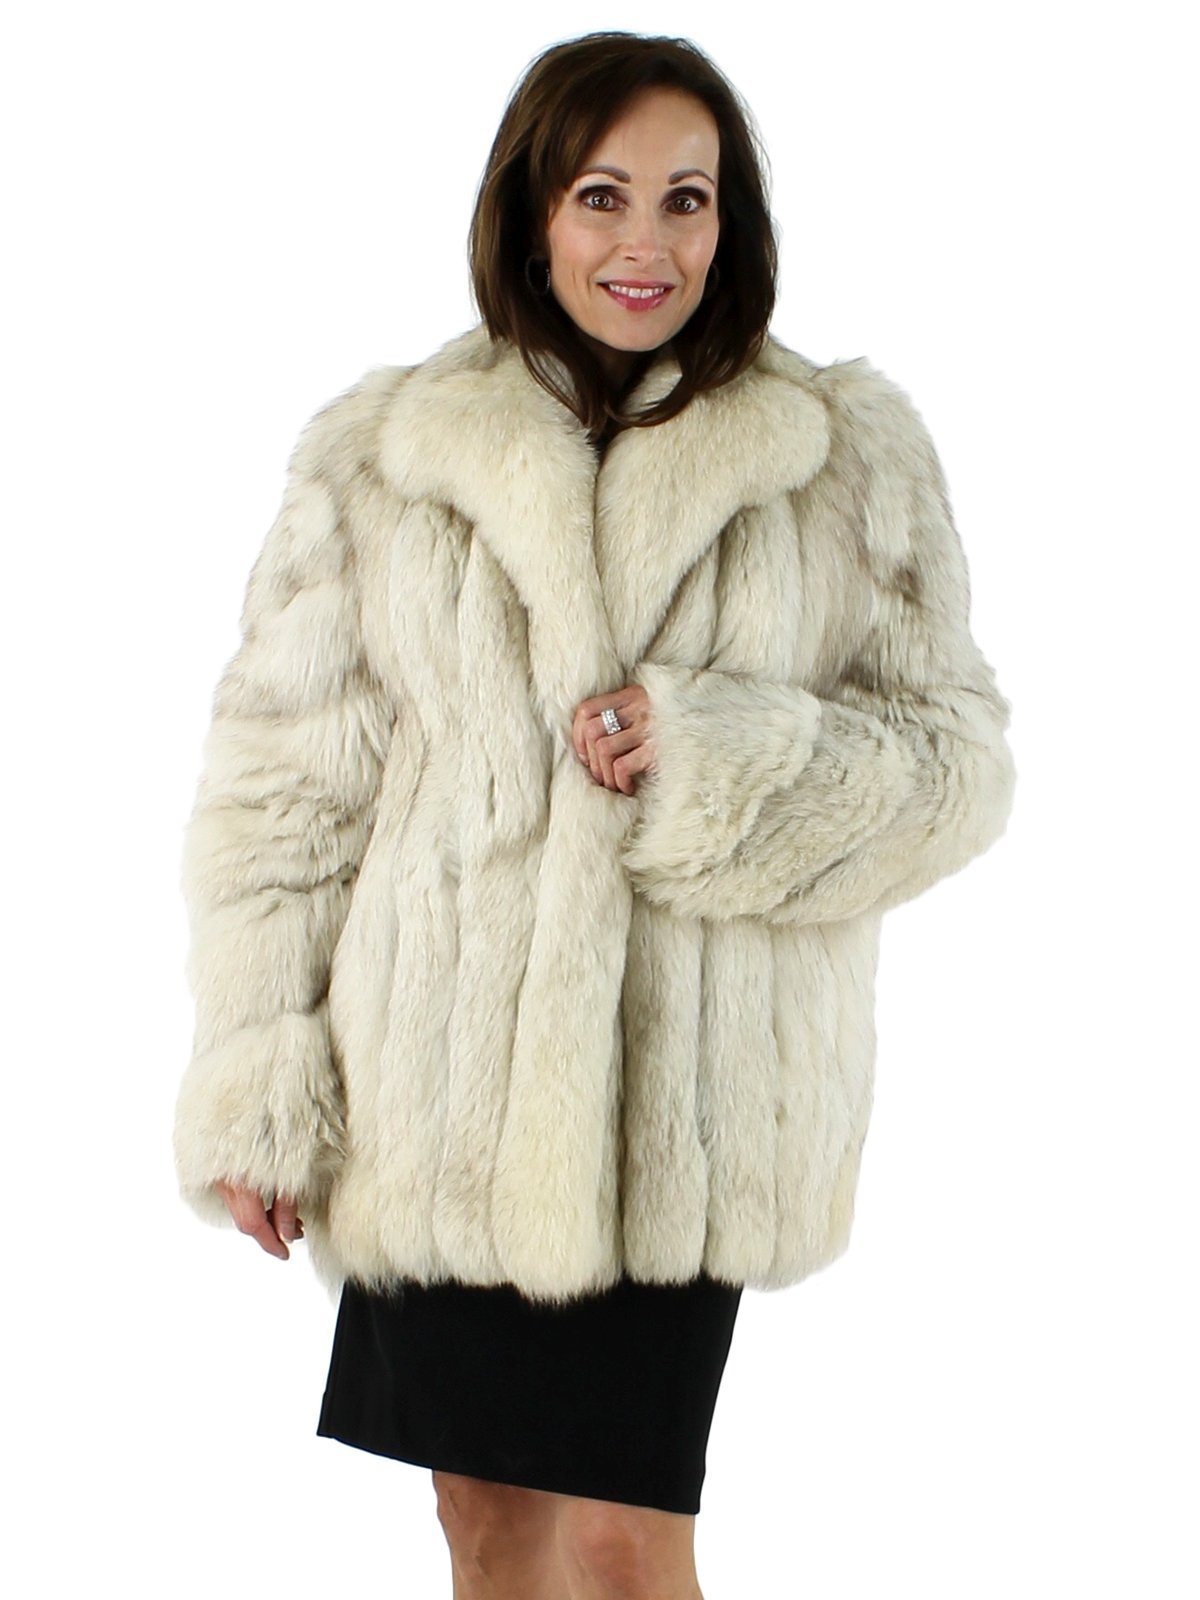 Blue Fox Fur Jacket w/ Diagonally Designed Sleeves - Women's Medium ...